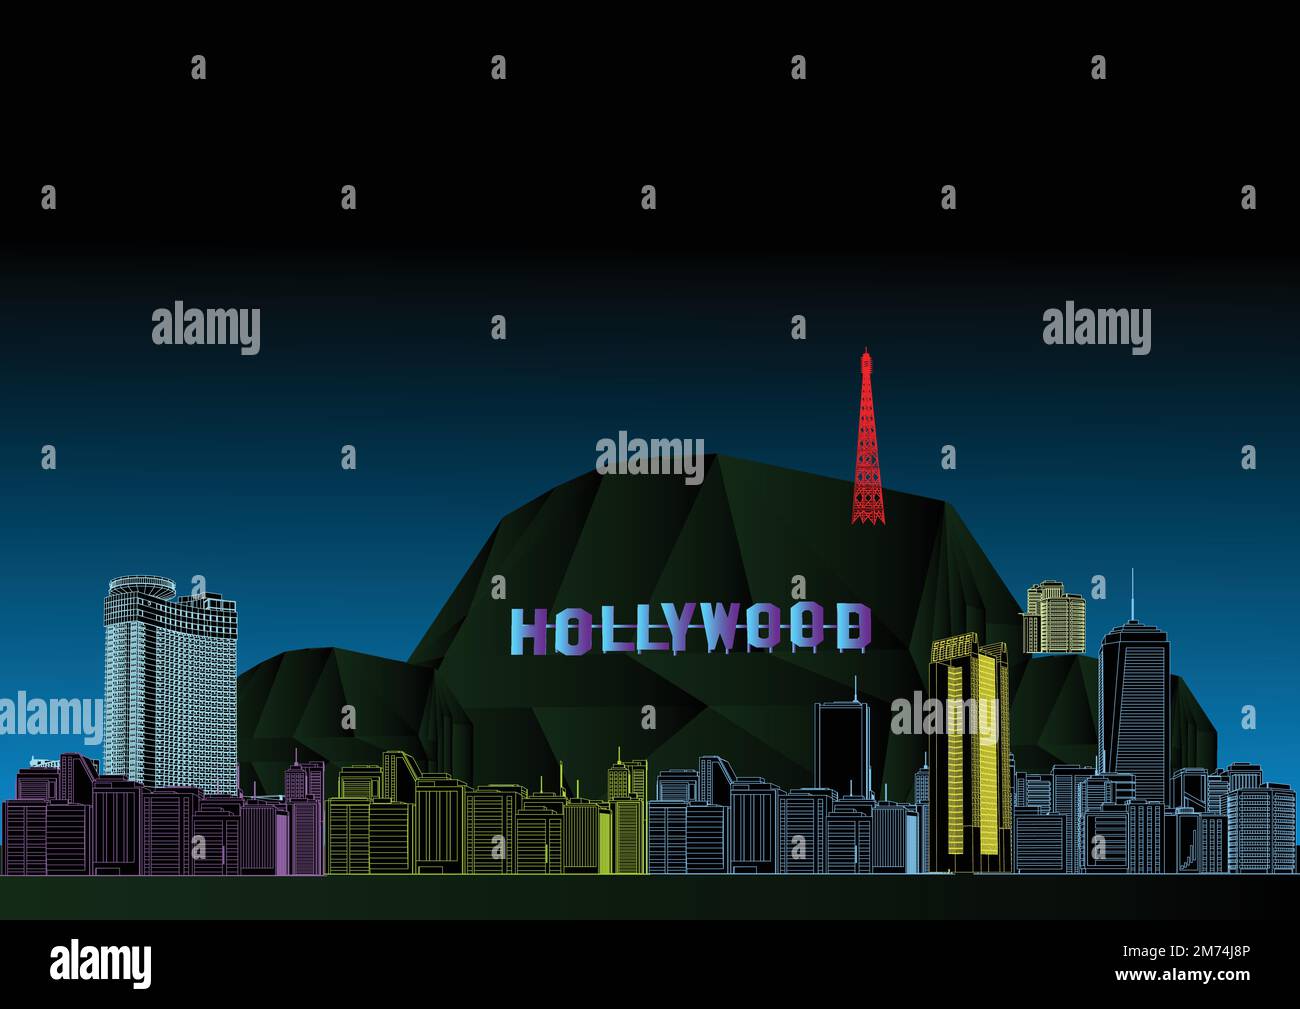 Beautiful Hollywood City Vector Illustration Stock Vector